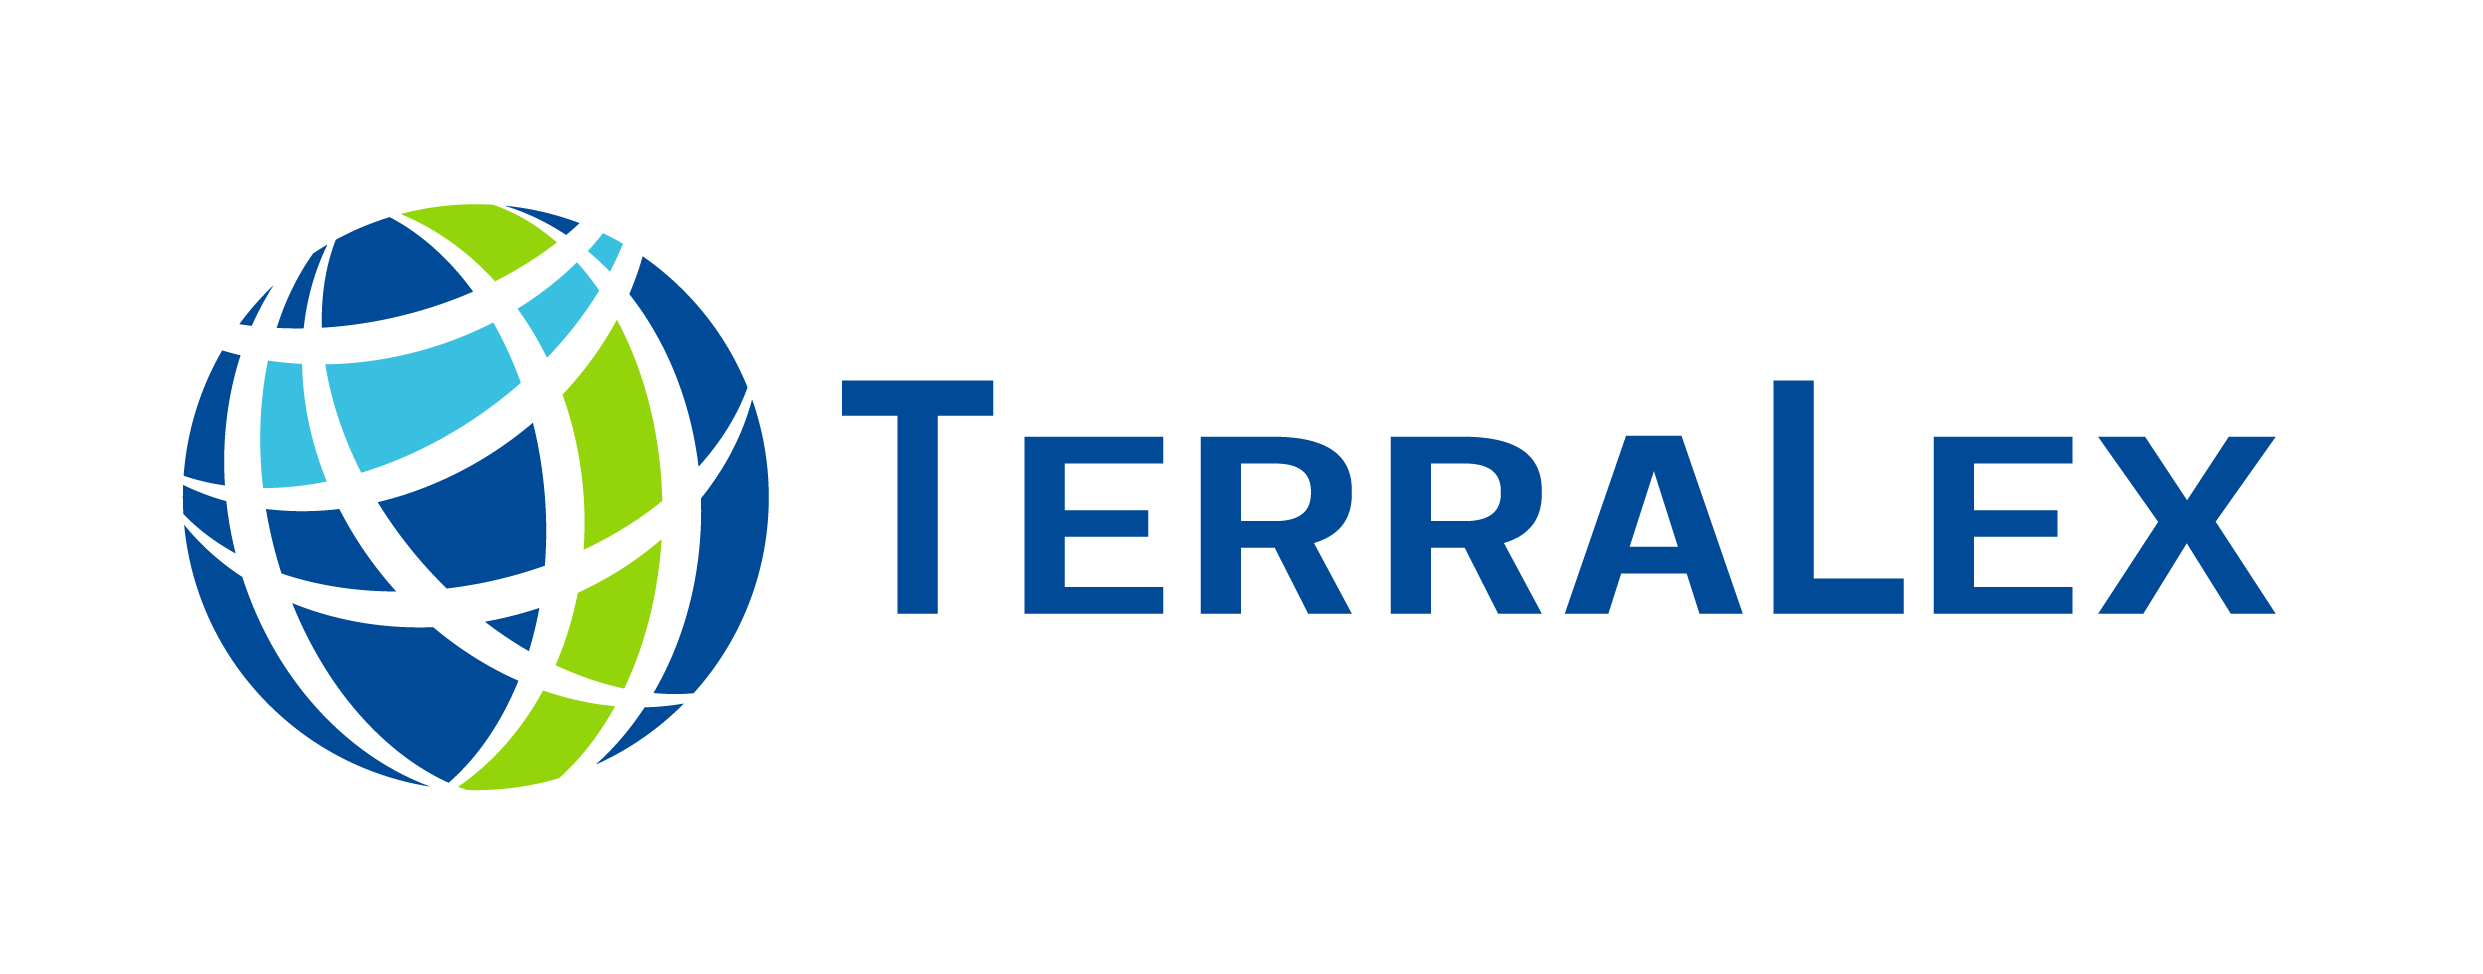 www.terralex.org